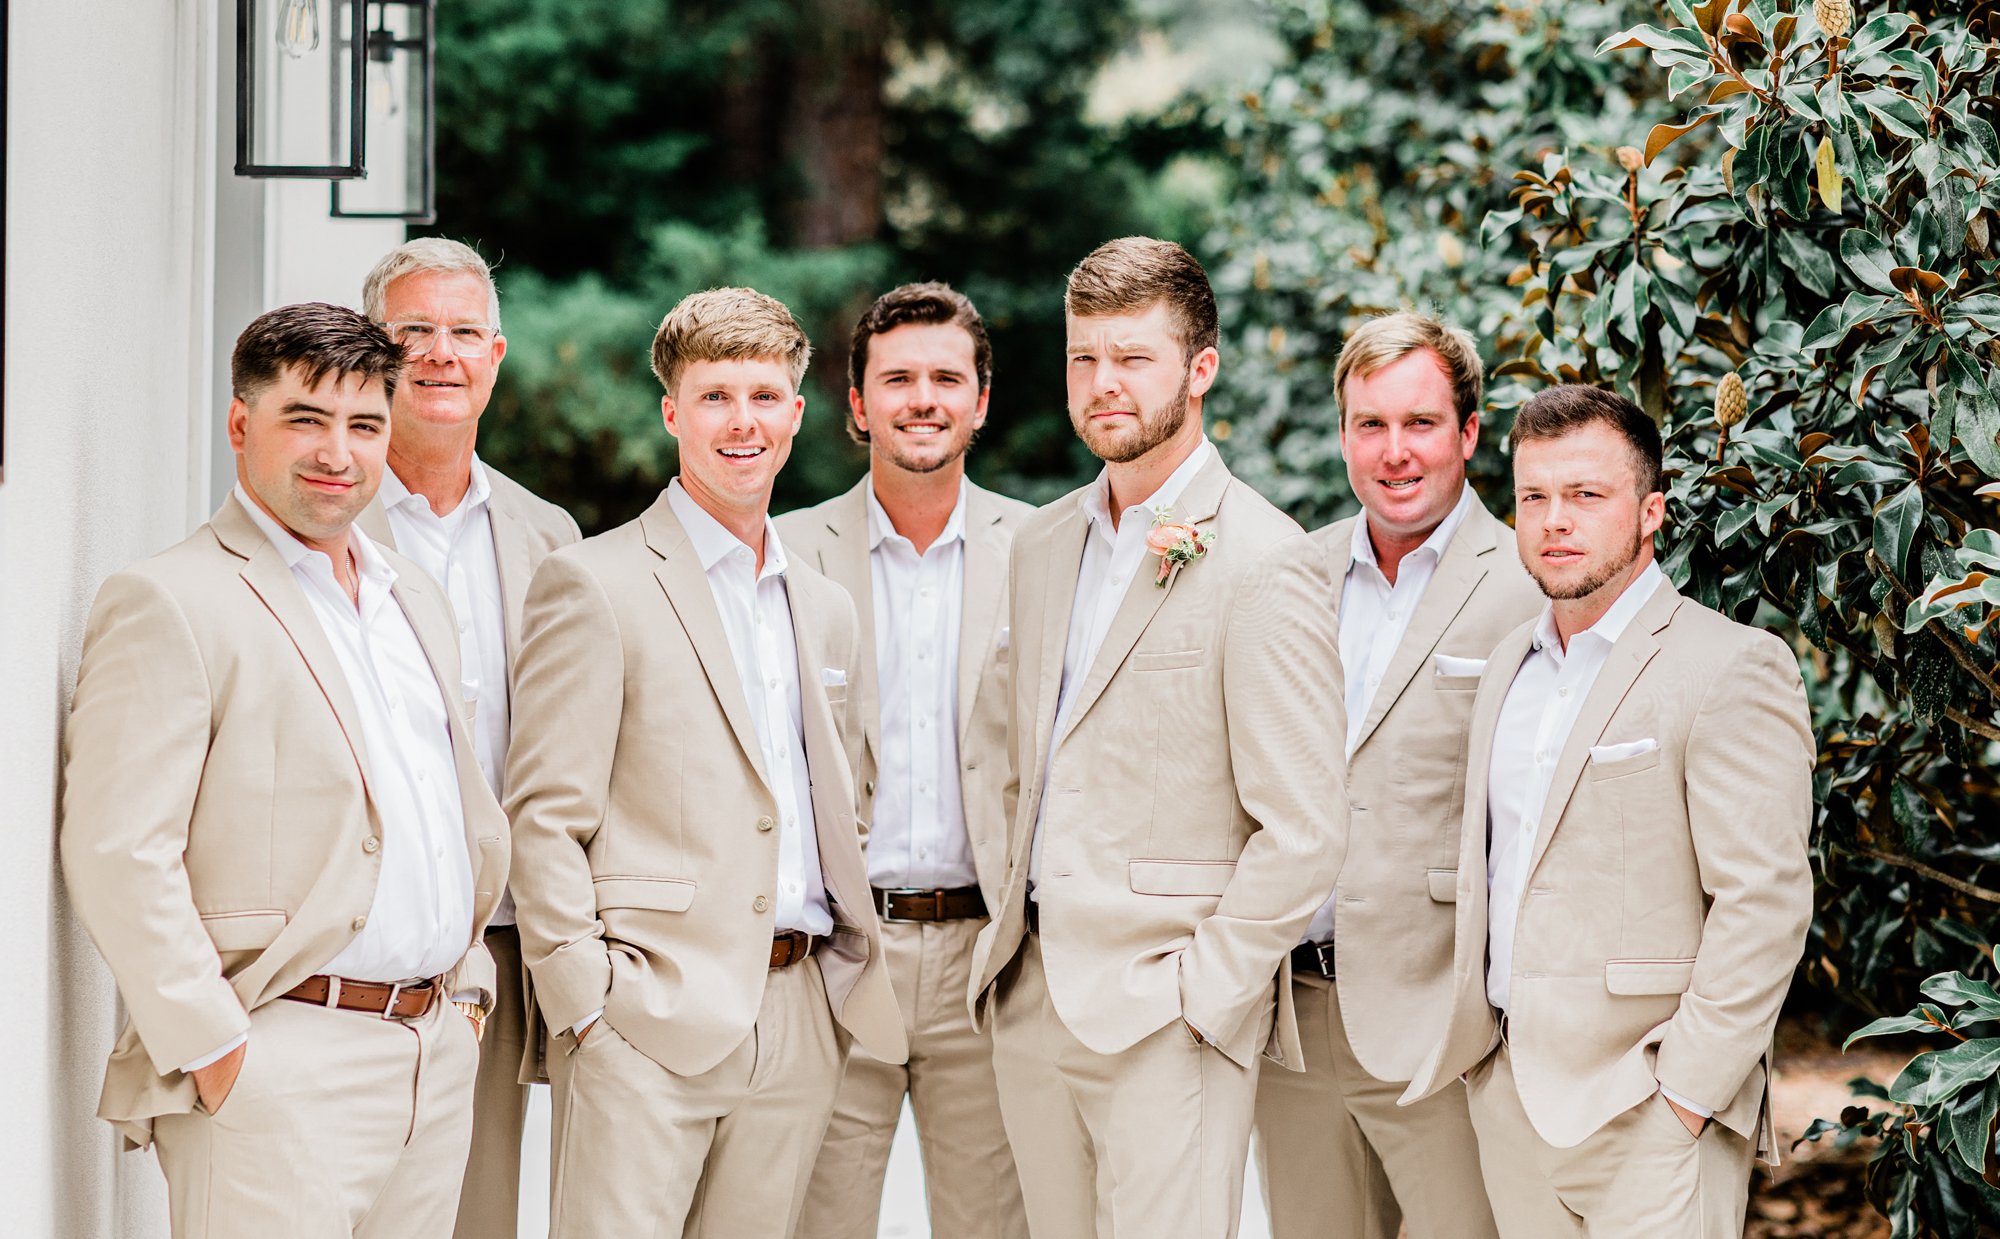 Greenville Sc Weding Day Timeline - groomsmen photos-1-6.jpg